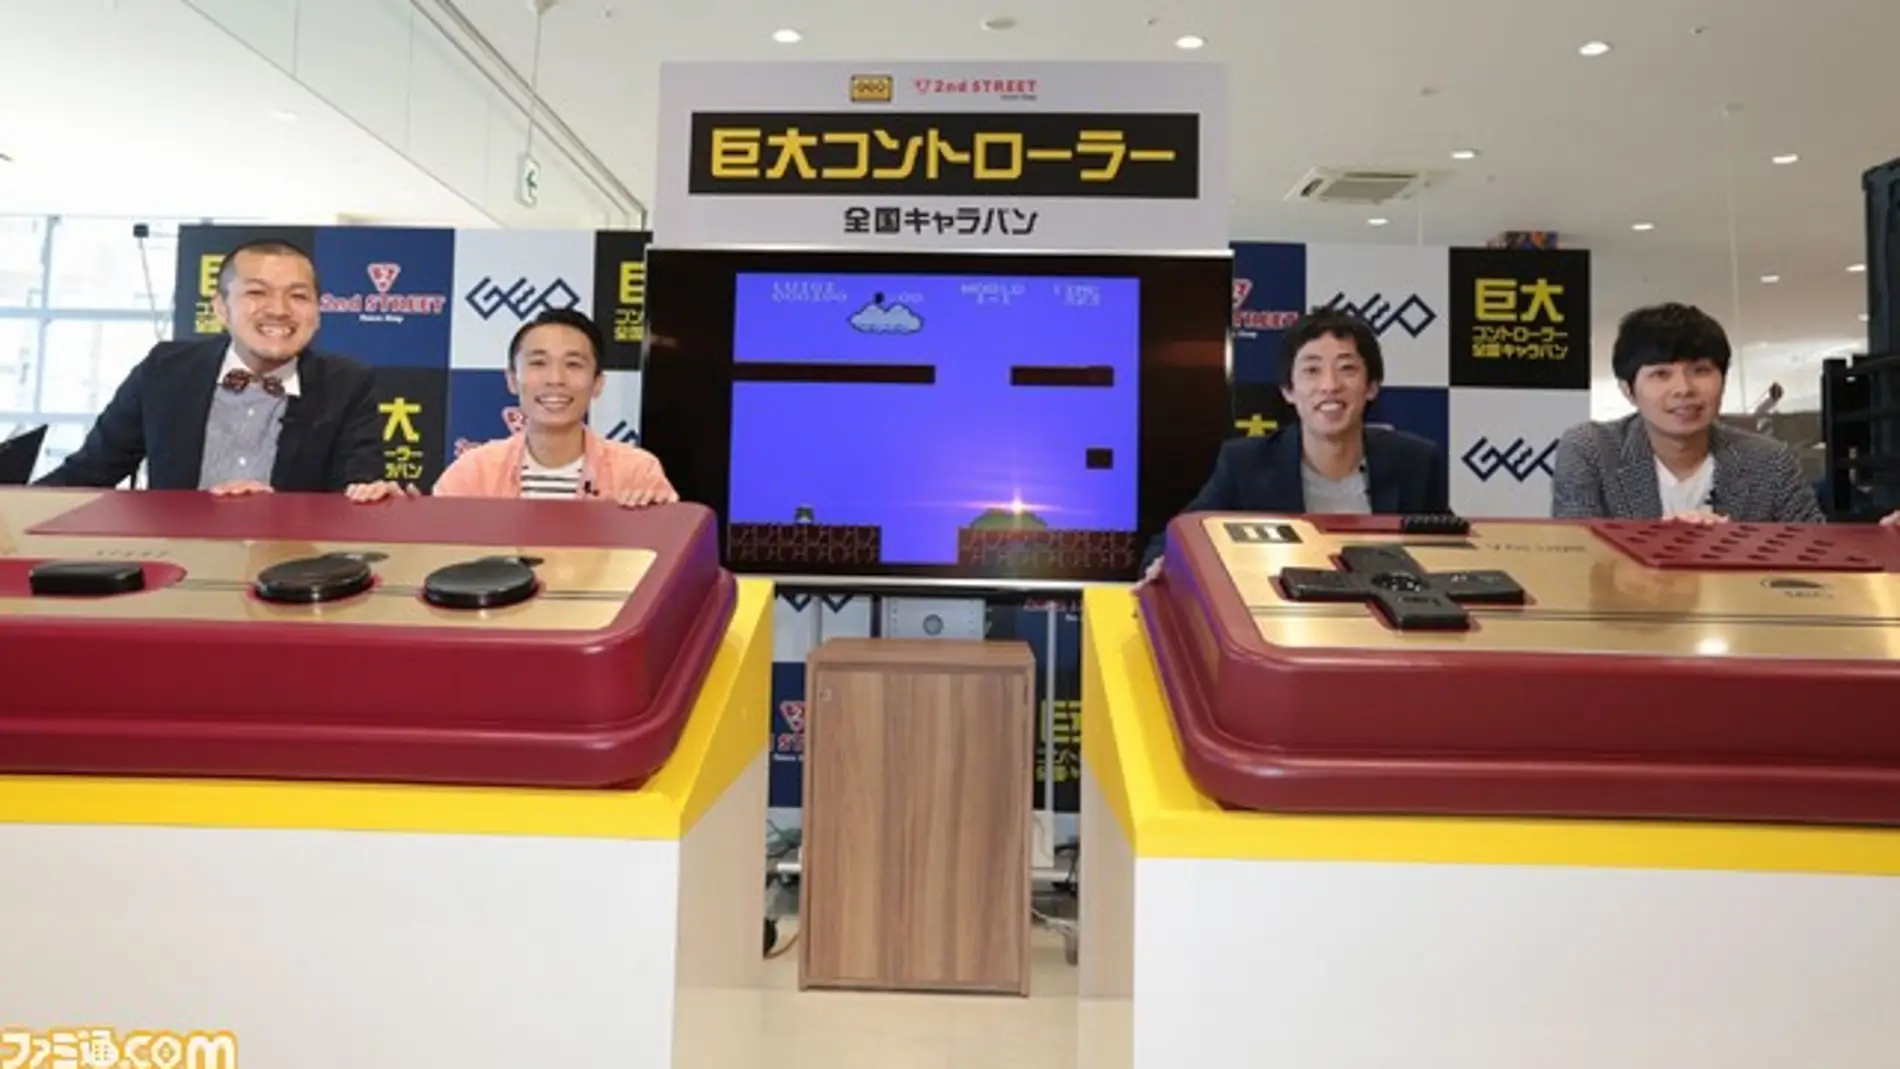 Geo Stores con Famicom